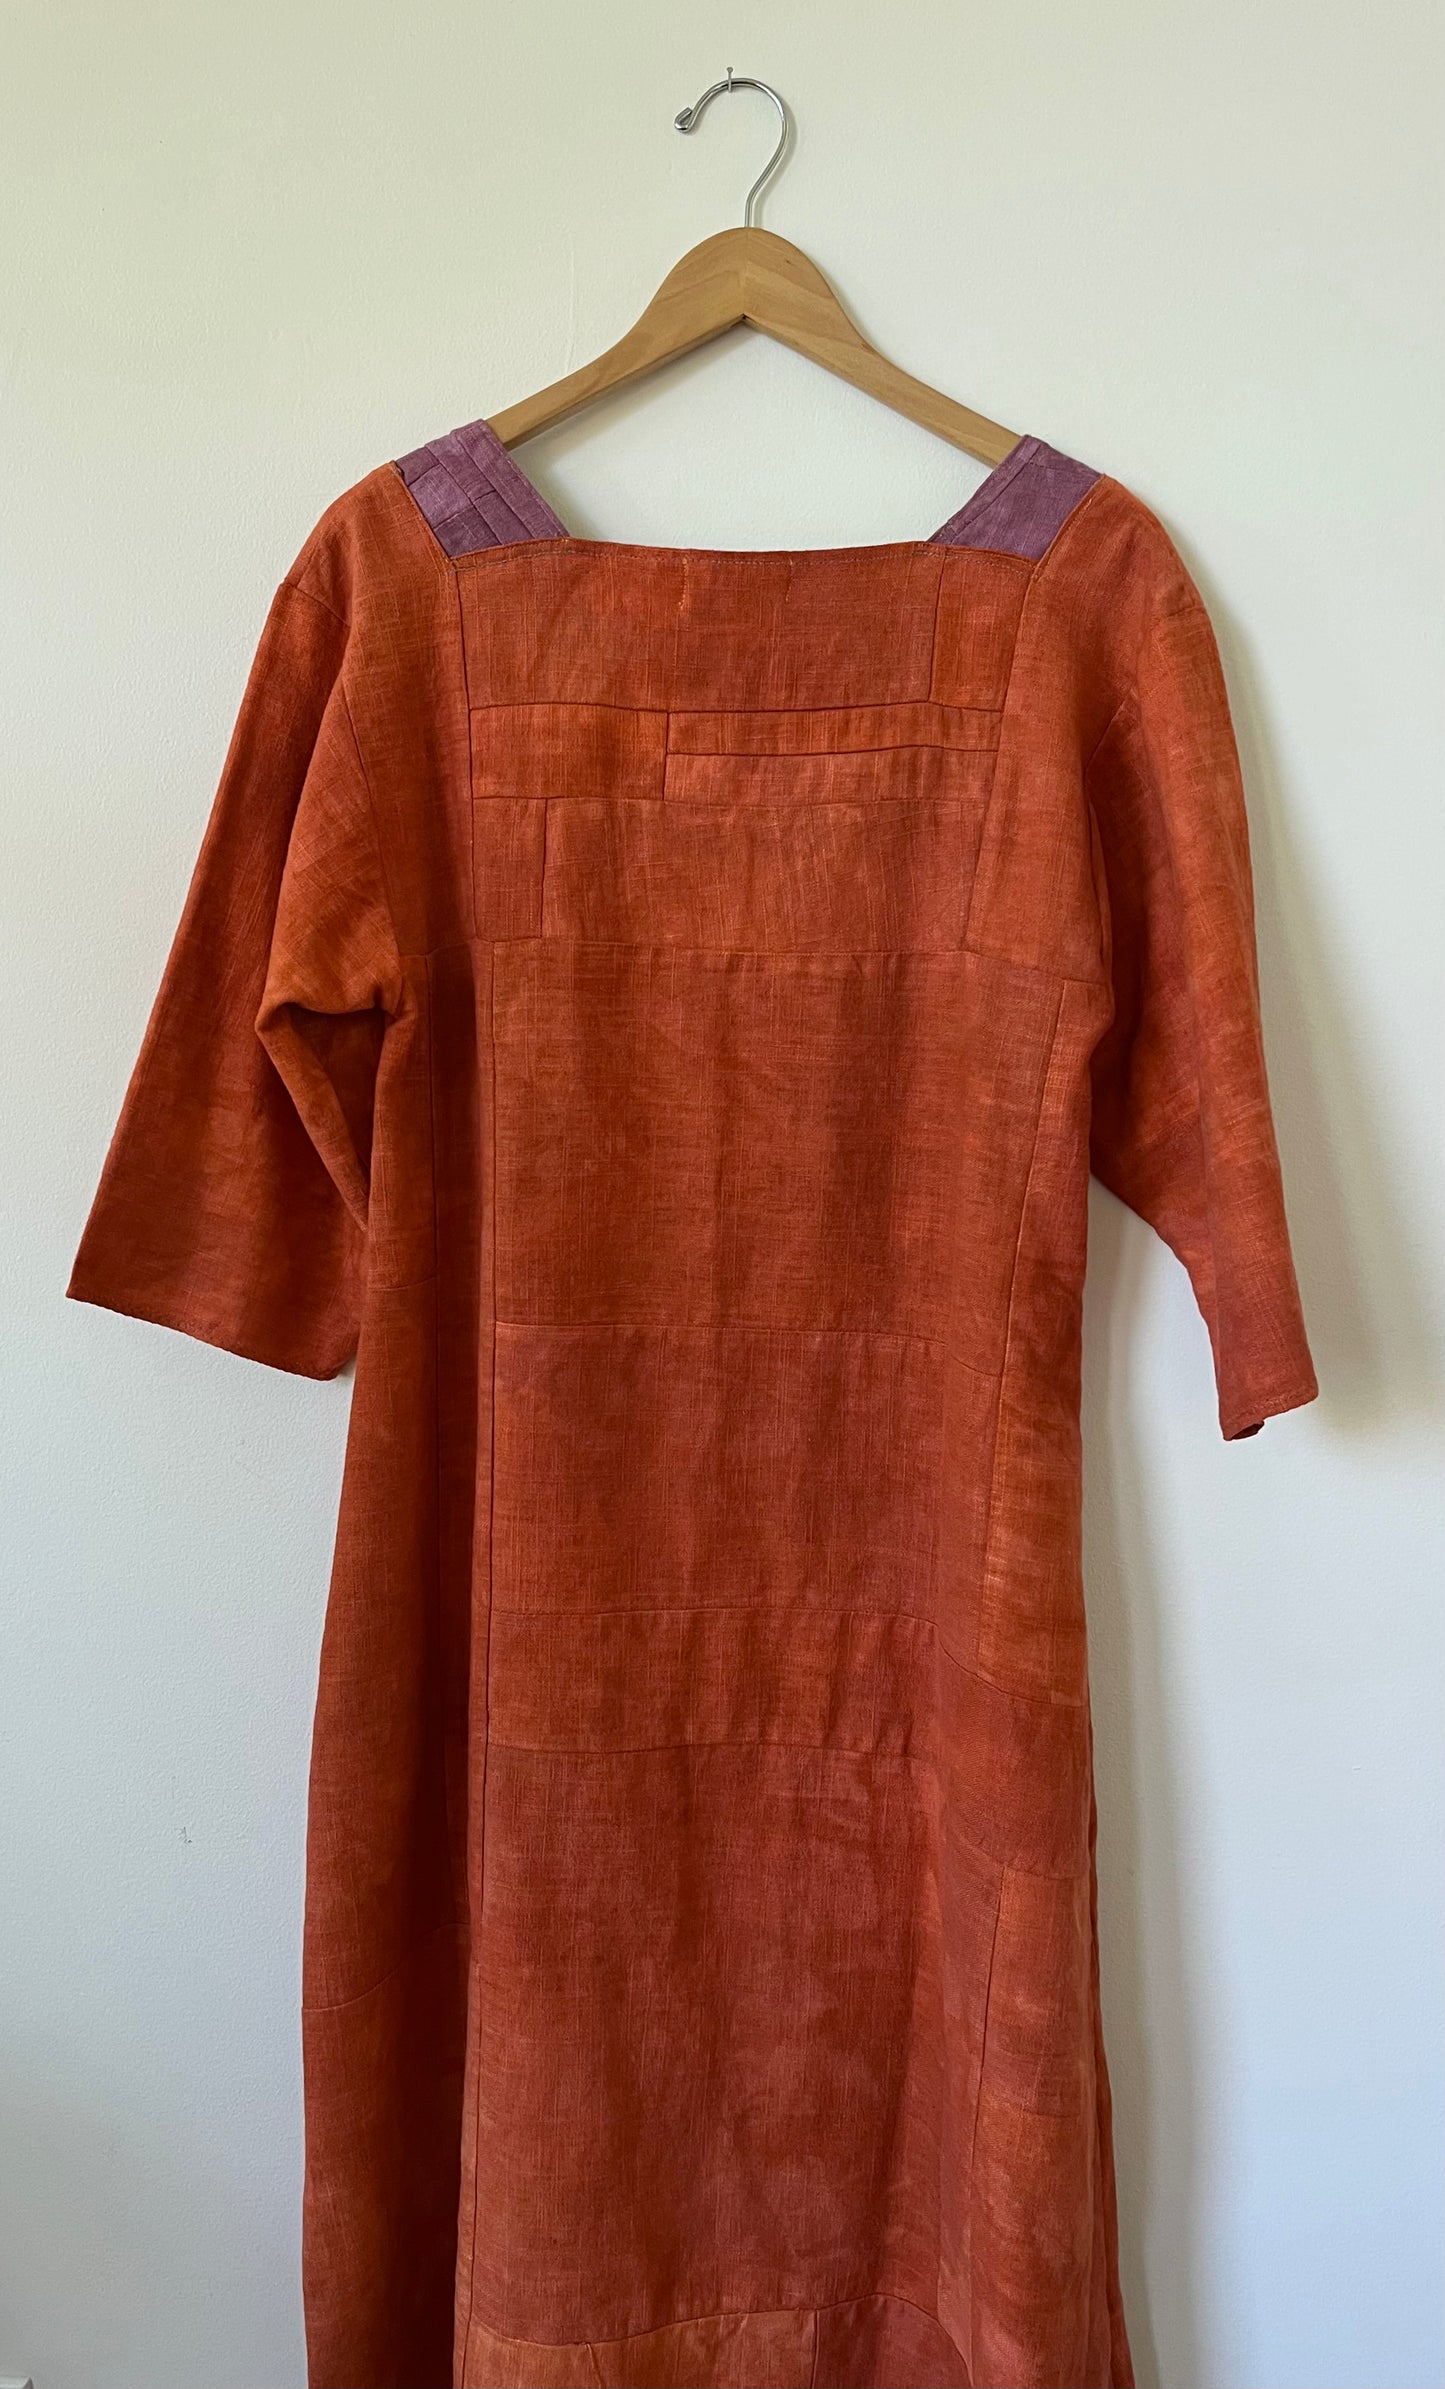 Rust dress